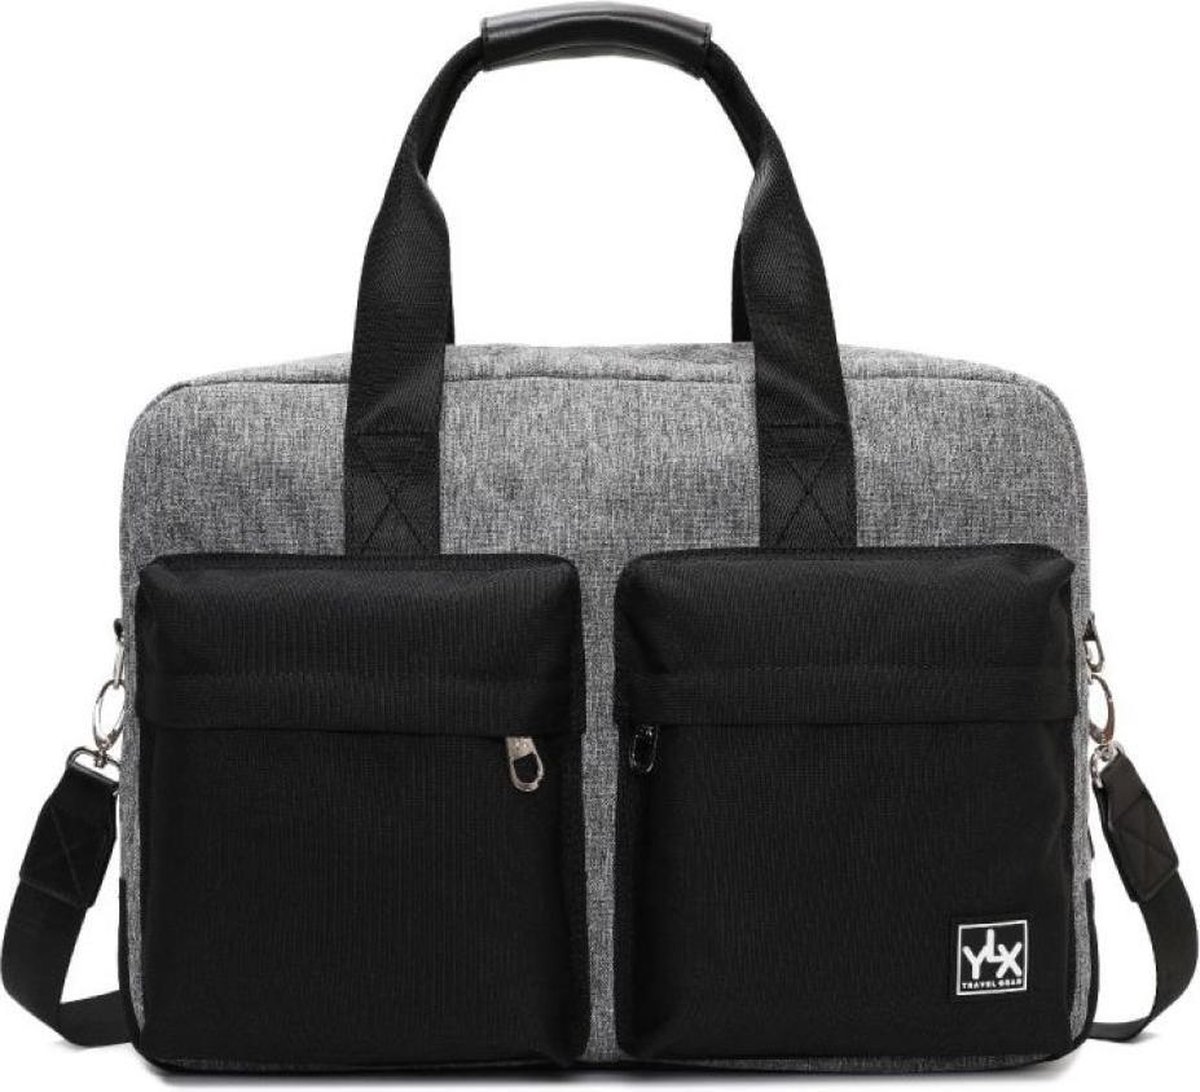 YLX Nash Laptop bag. Donker grijs & zwart. Recycled Rpet materiaal. Gerecyclede plastic flessen. Eco-friendly. 15